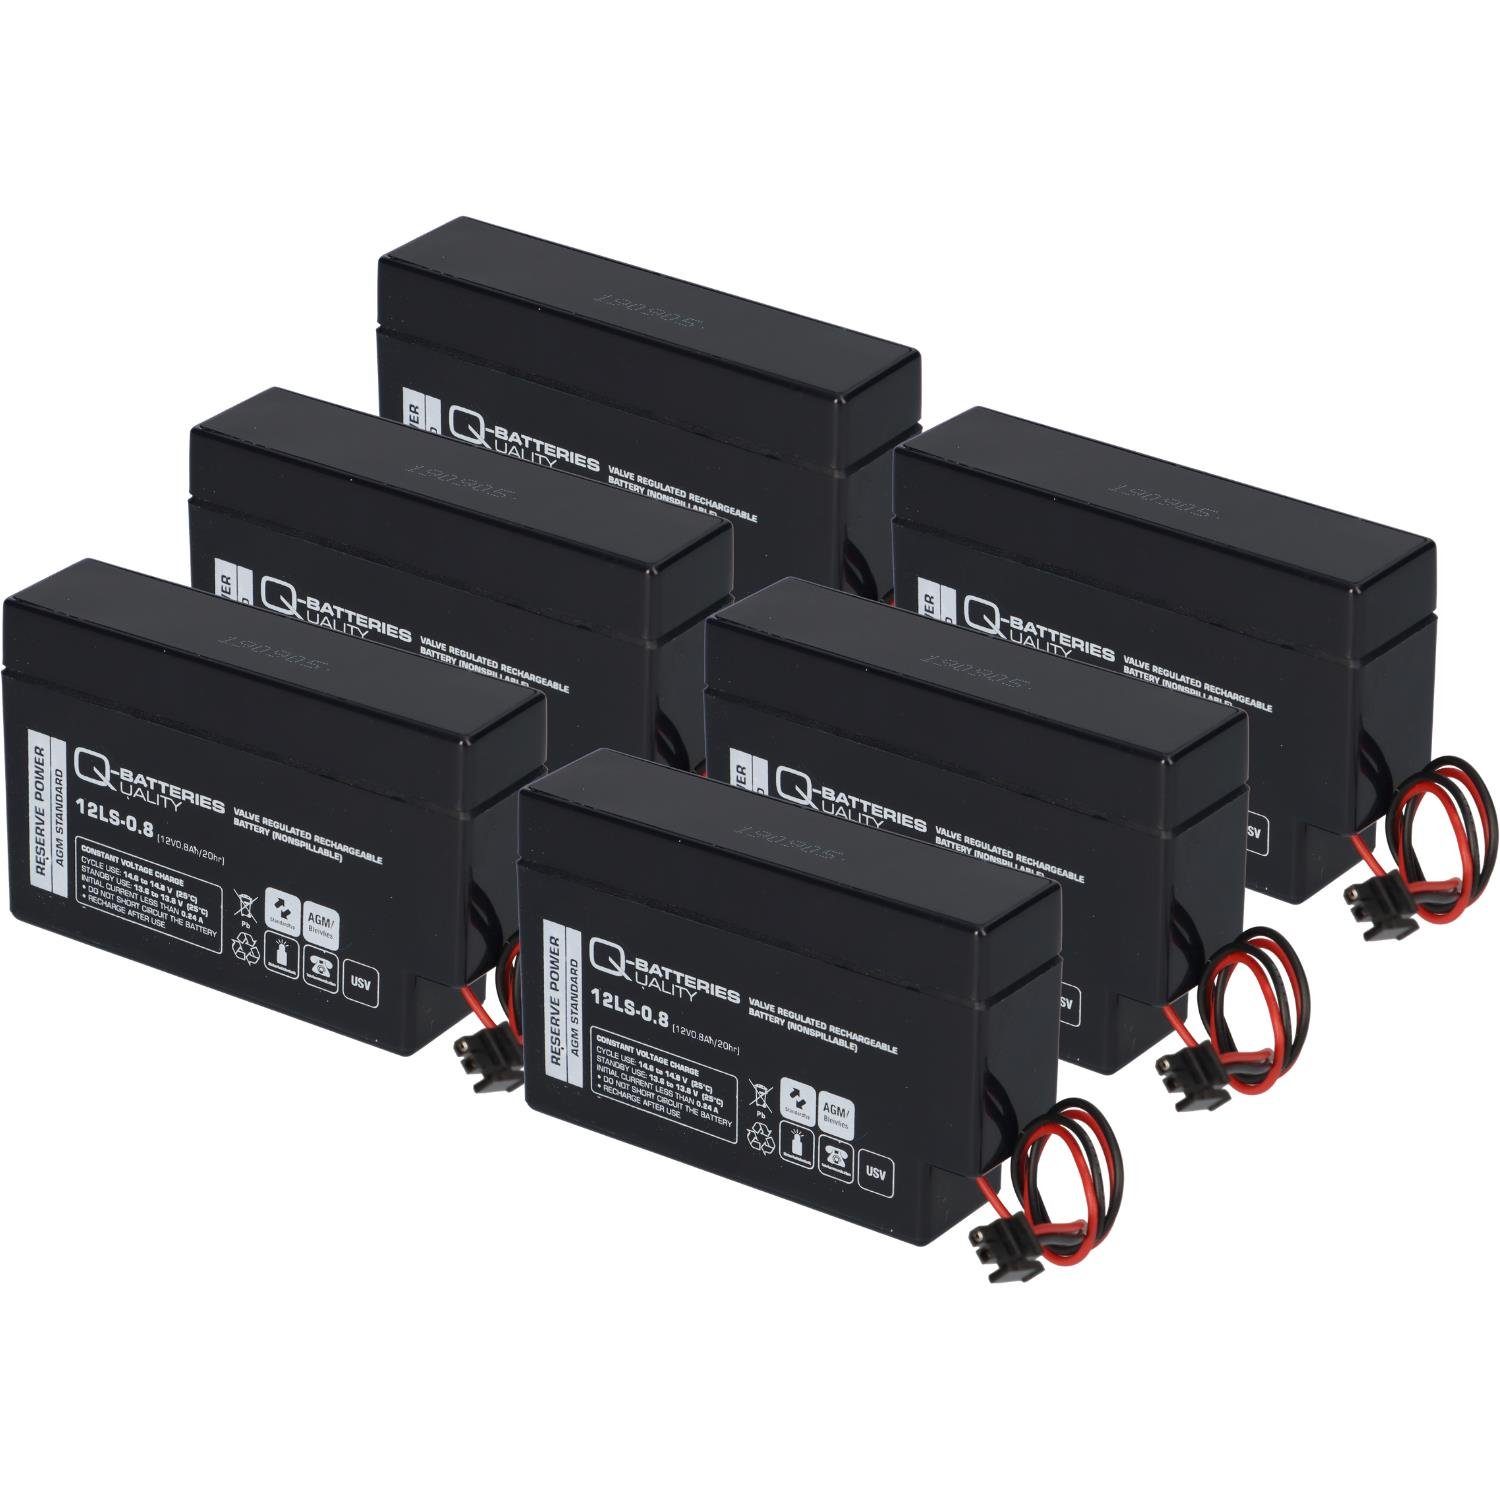 12V Q-Batteries 12LS-0.8 & AGM Haus Q-Batteries 0,8Ah Blei-Vlies Bleiakkus 6x Heim Akku